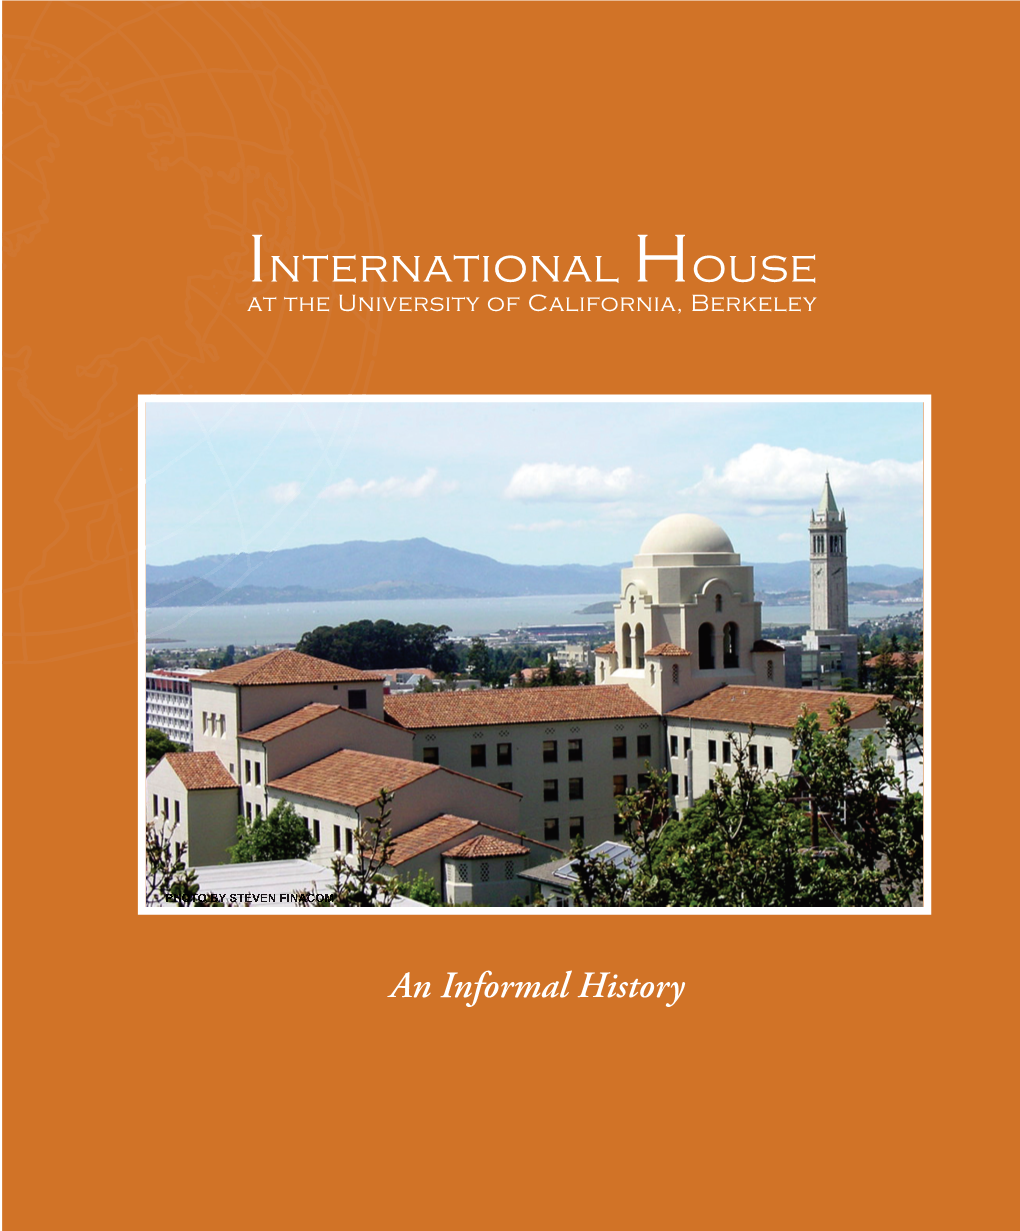 International House: an Informal History